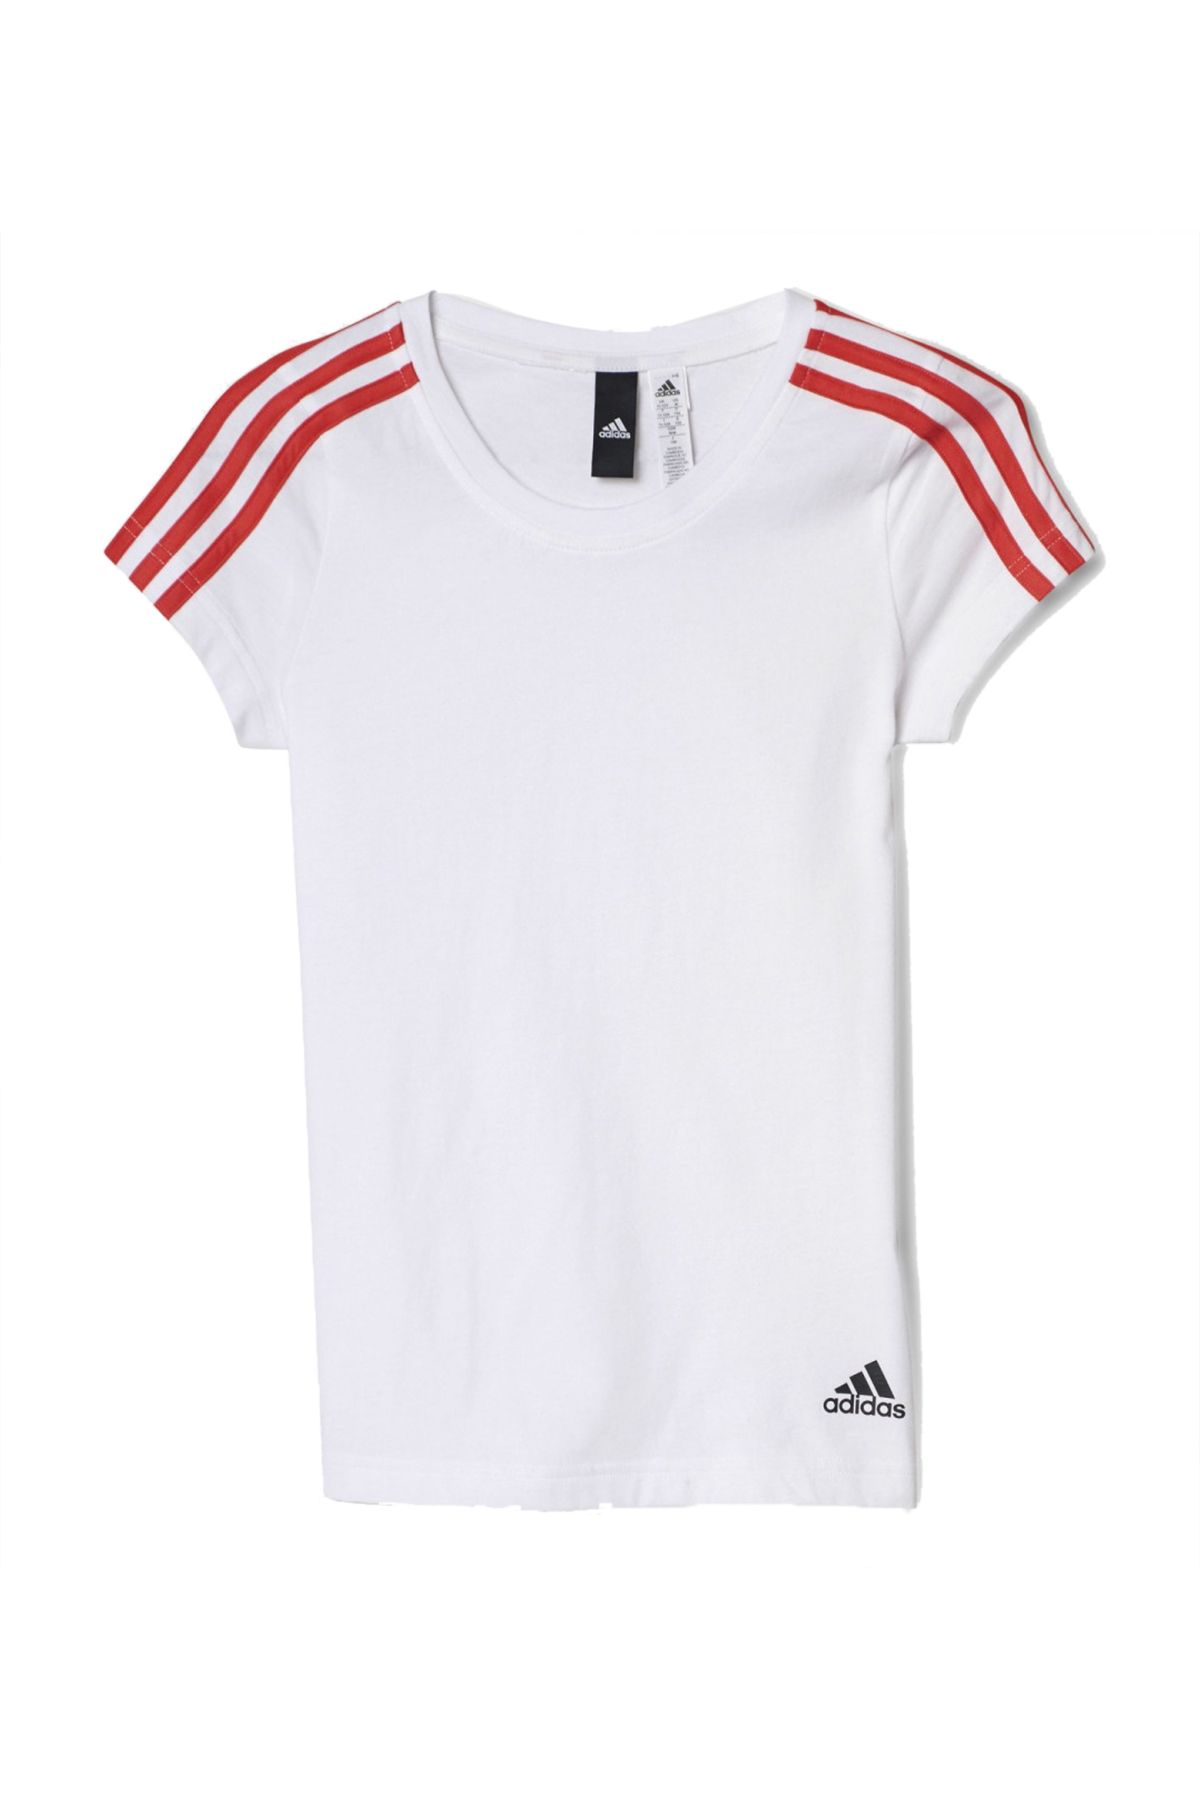 adidas Kız Çocuk T-shirt - Yg 3S Tee - BP8619